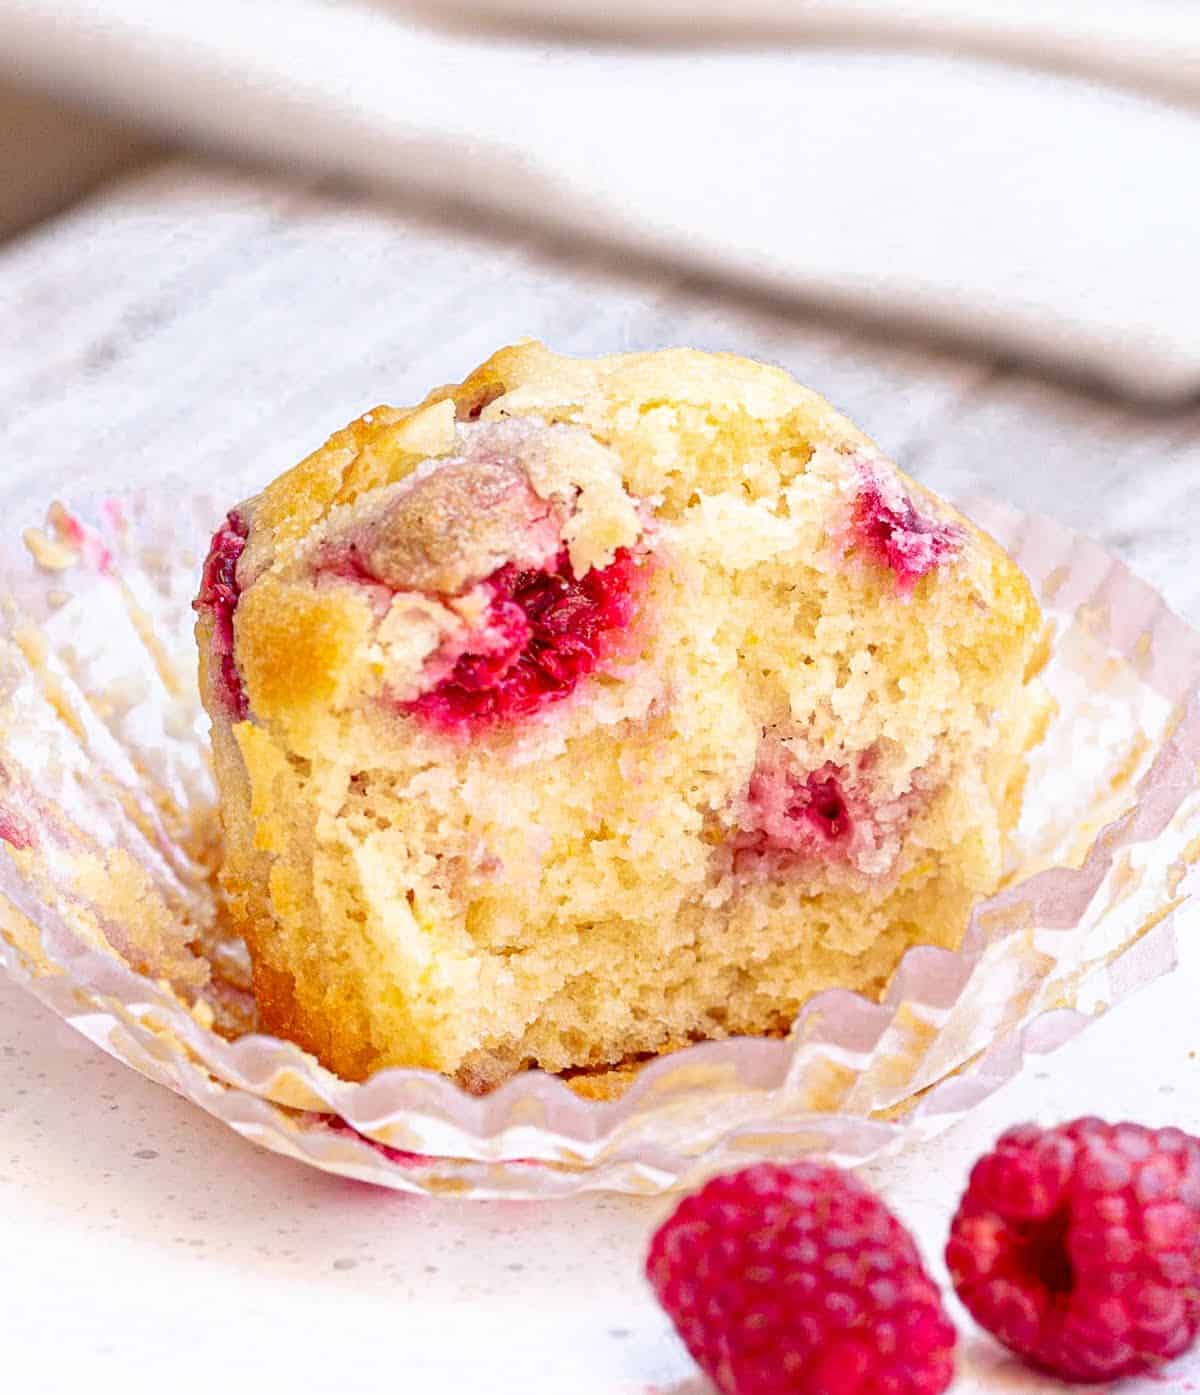 Half raspberry muffin in paper liner on white plate, fresh raspberries around.